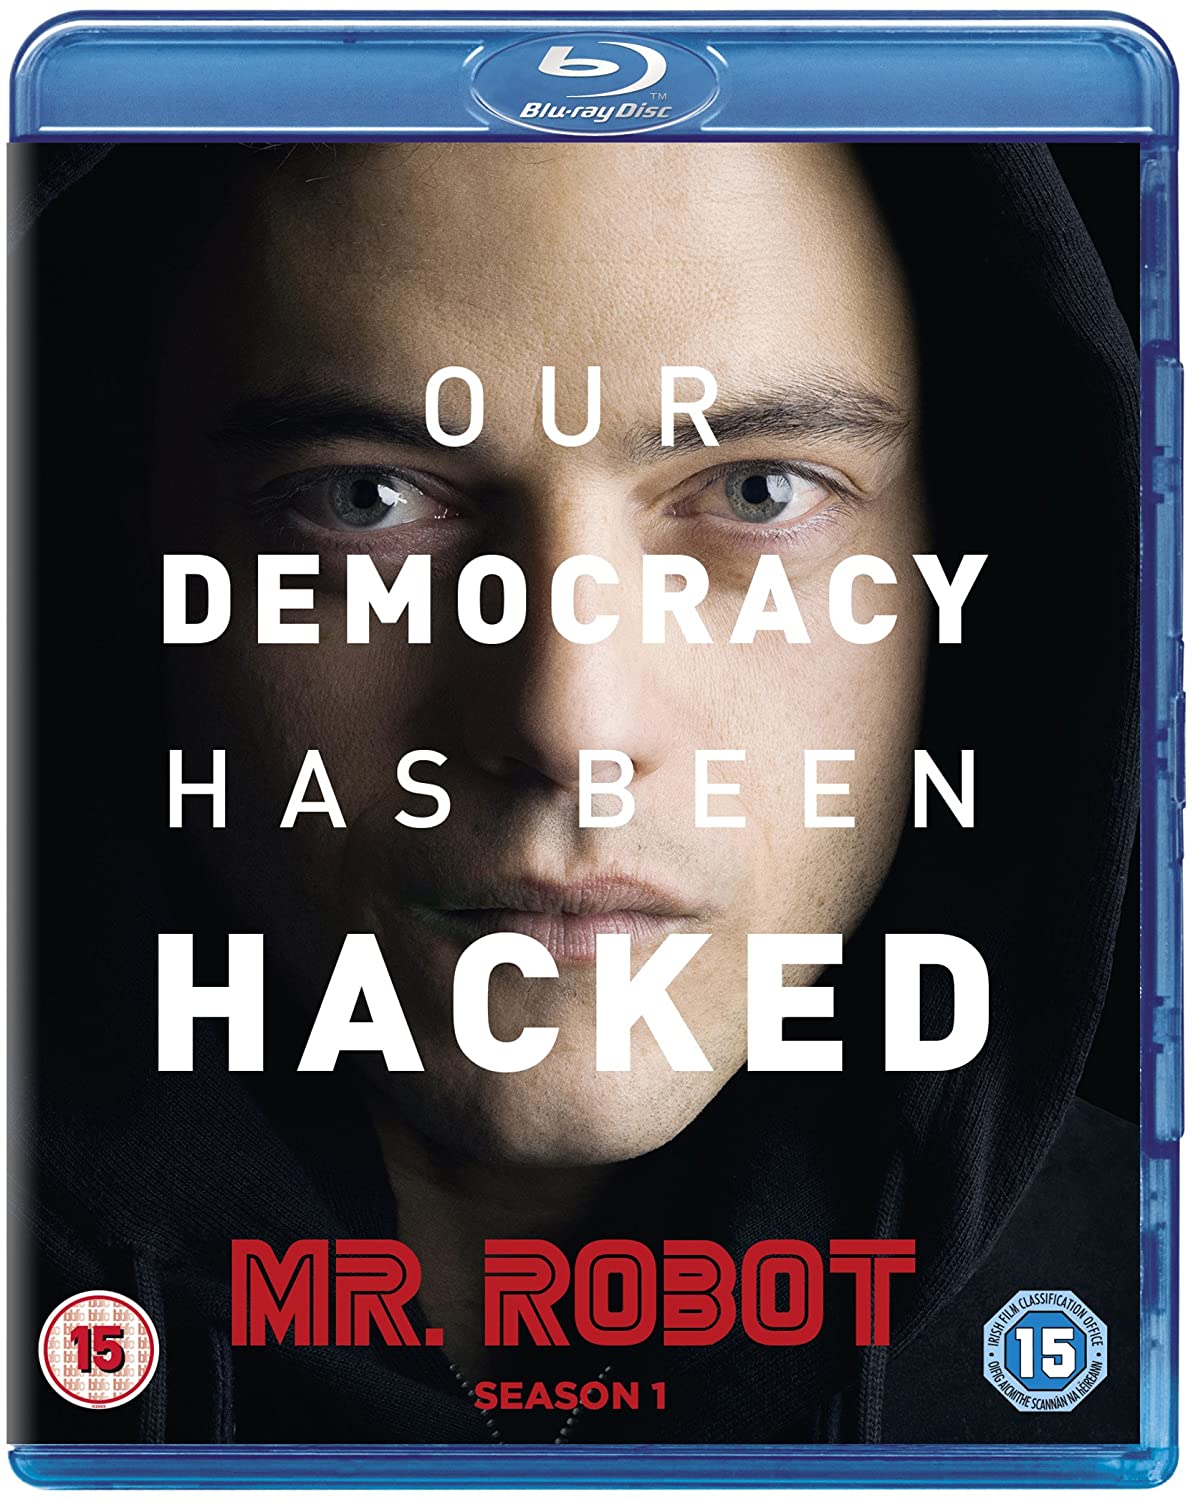 CoverCity - DVD Covers & Labels - Mr. Robot - Season 1